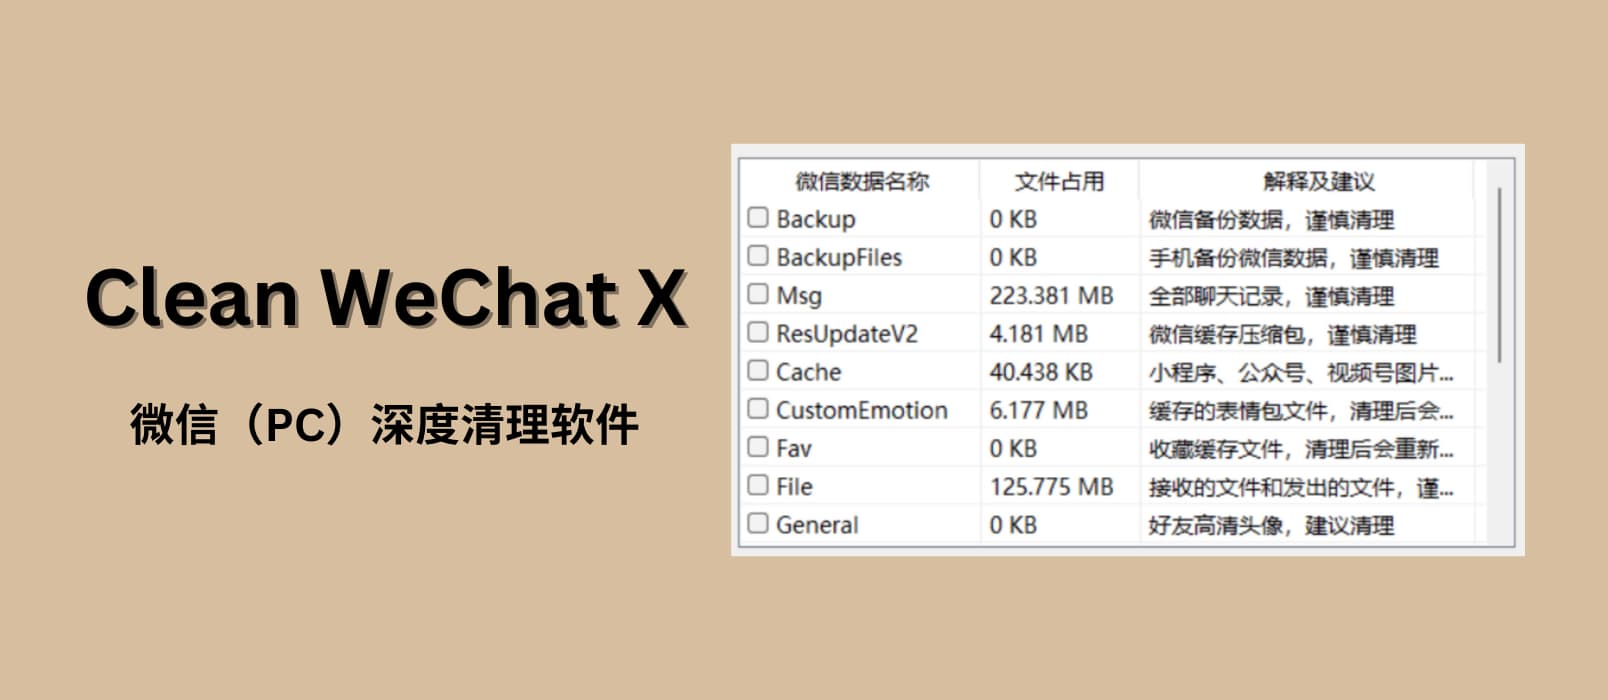 Clean WeChat X - 微信（PC）深度清理软件